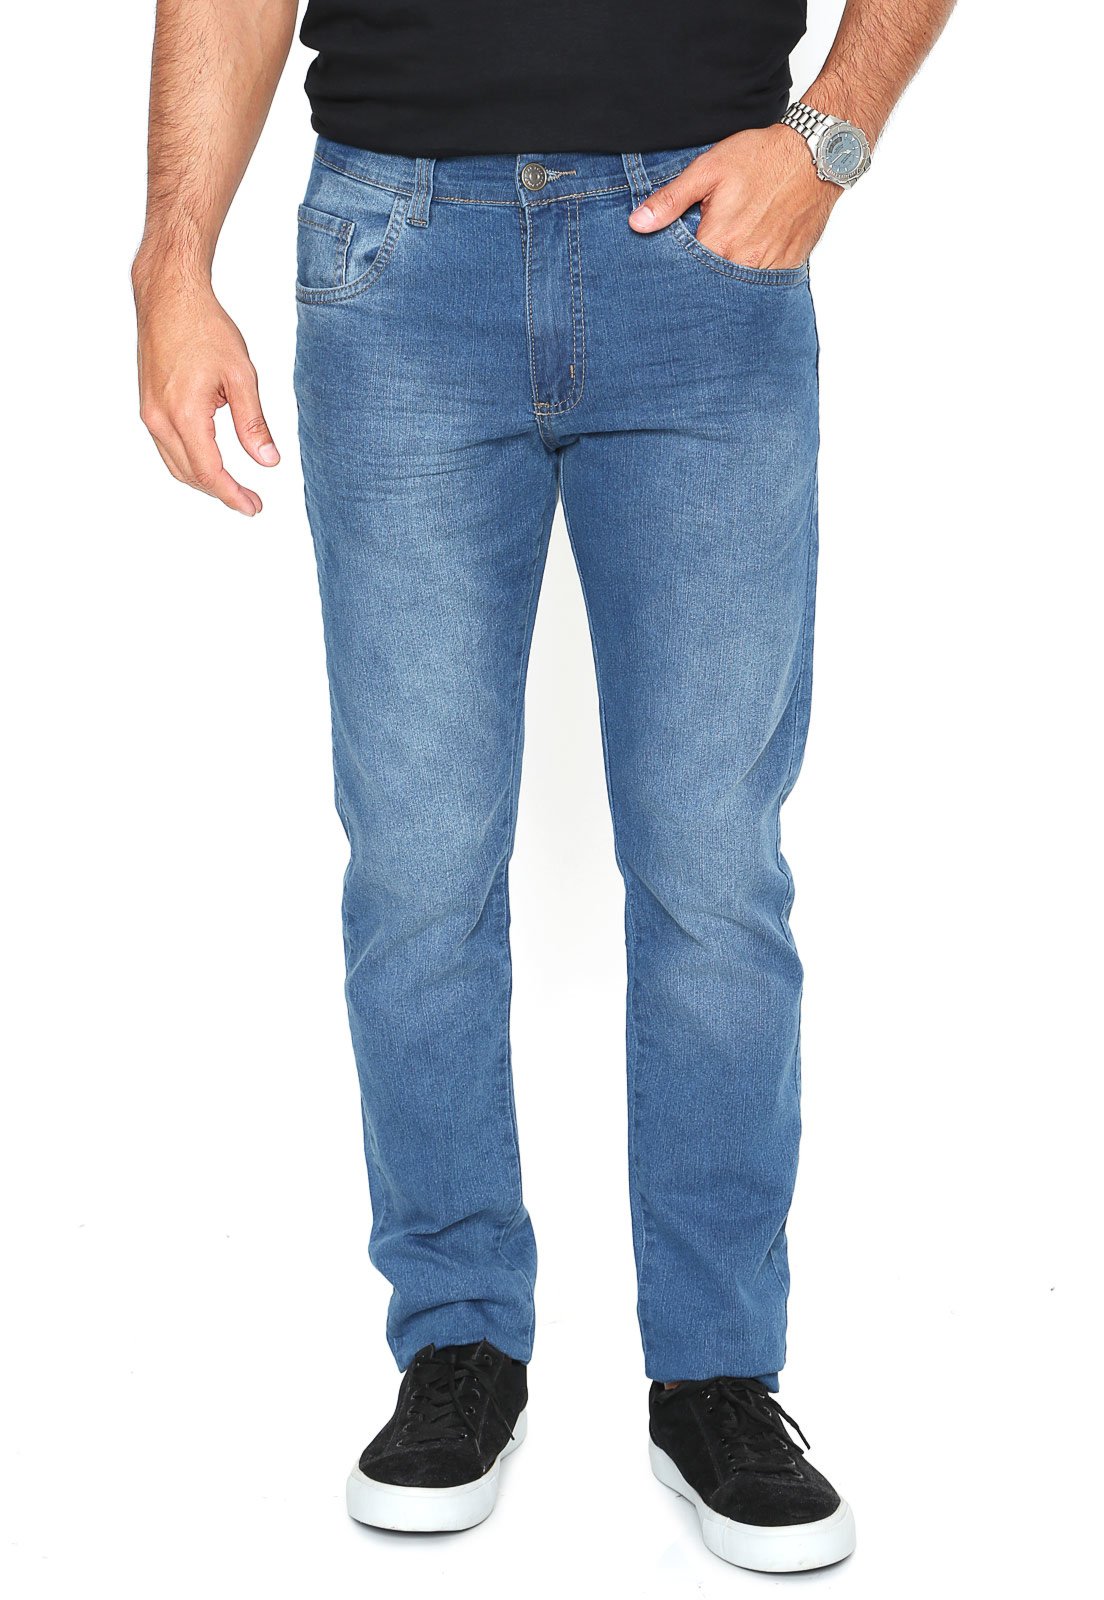 calças jeans masculina polo wear